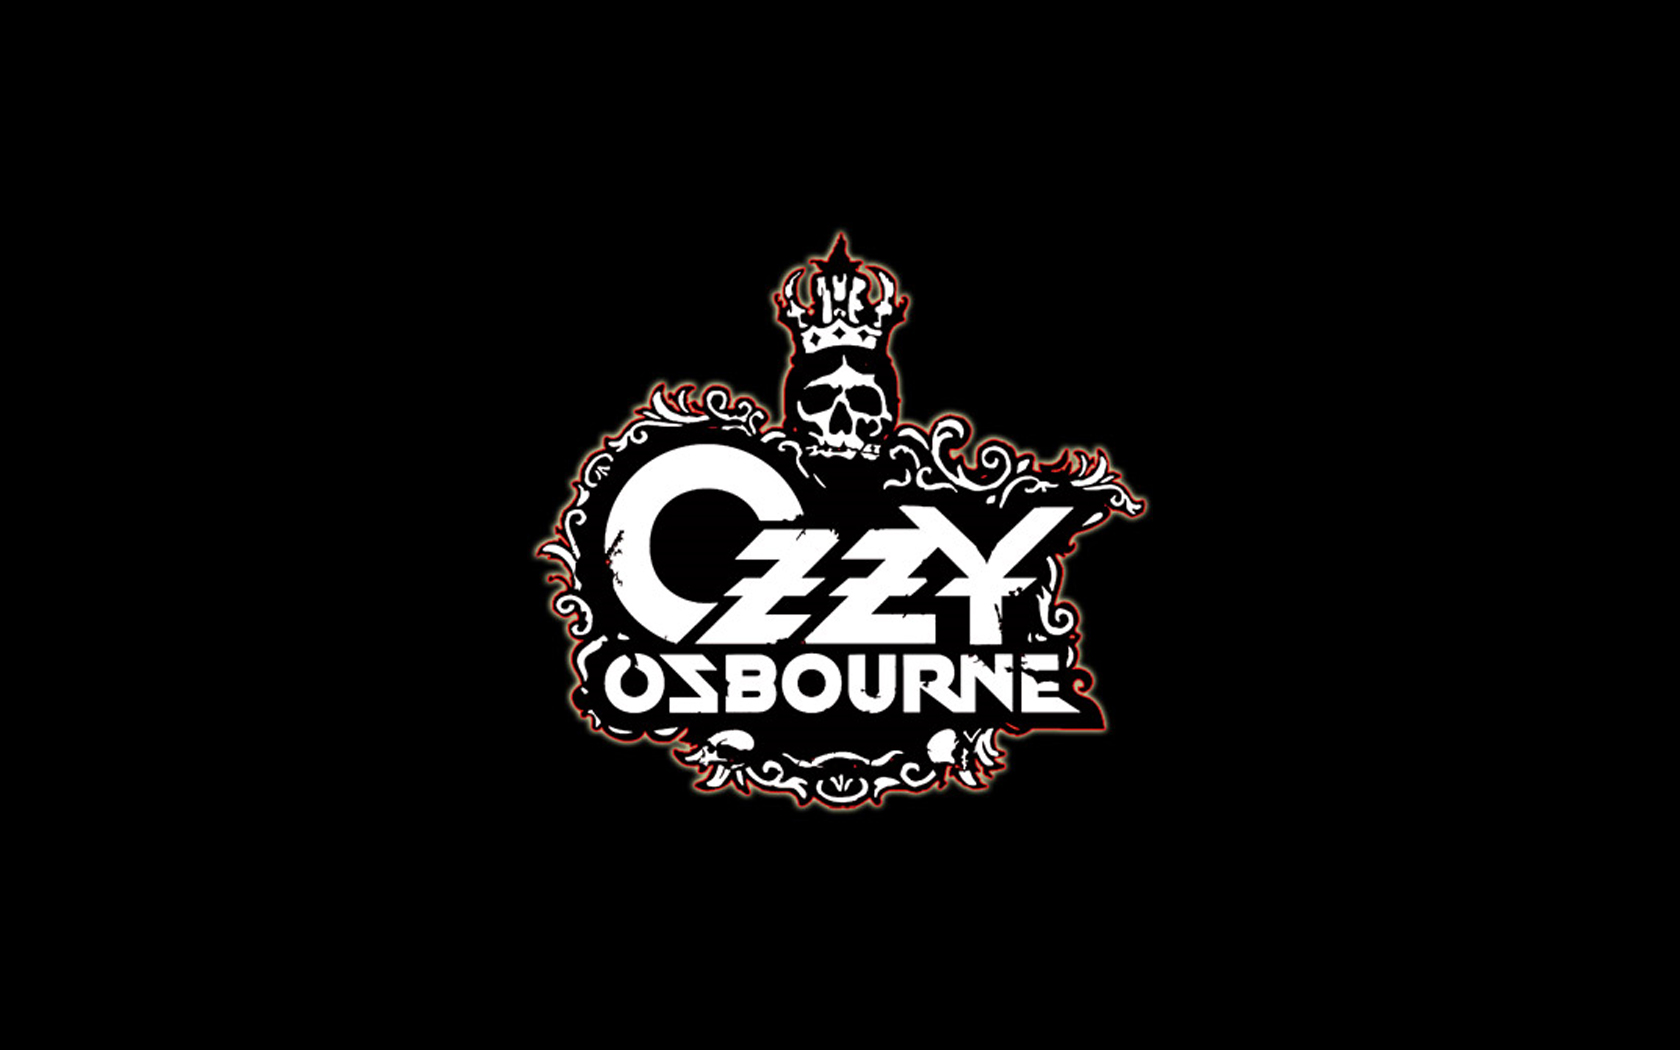 Music Ozzy Osbourne HD Wallpaper | Background Image